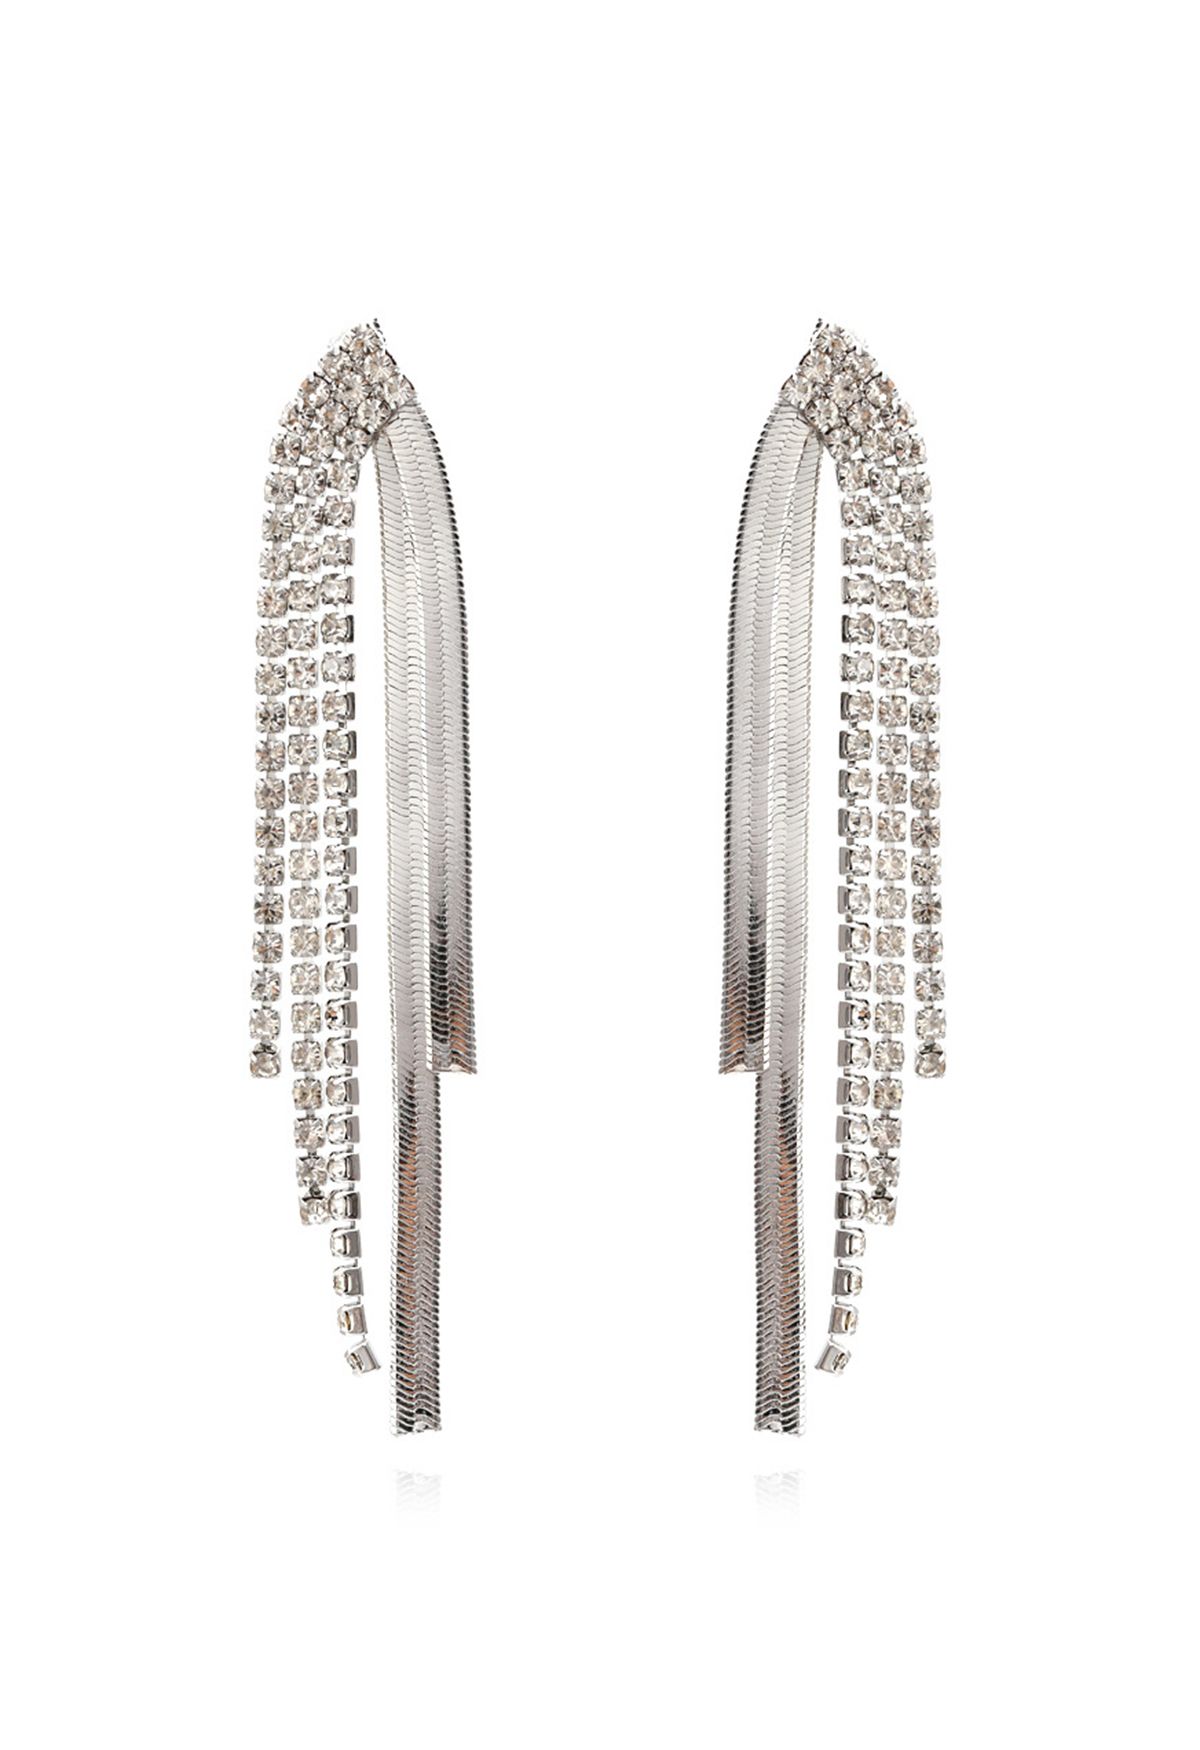 Aretes colgantes de lujo con detalles de diamantes en plata